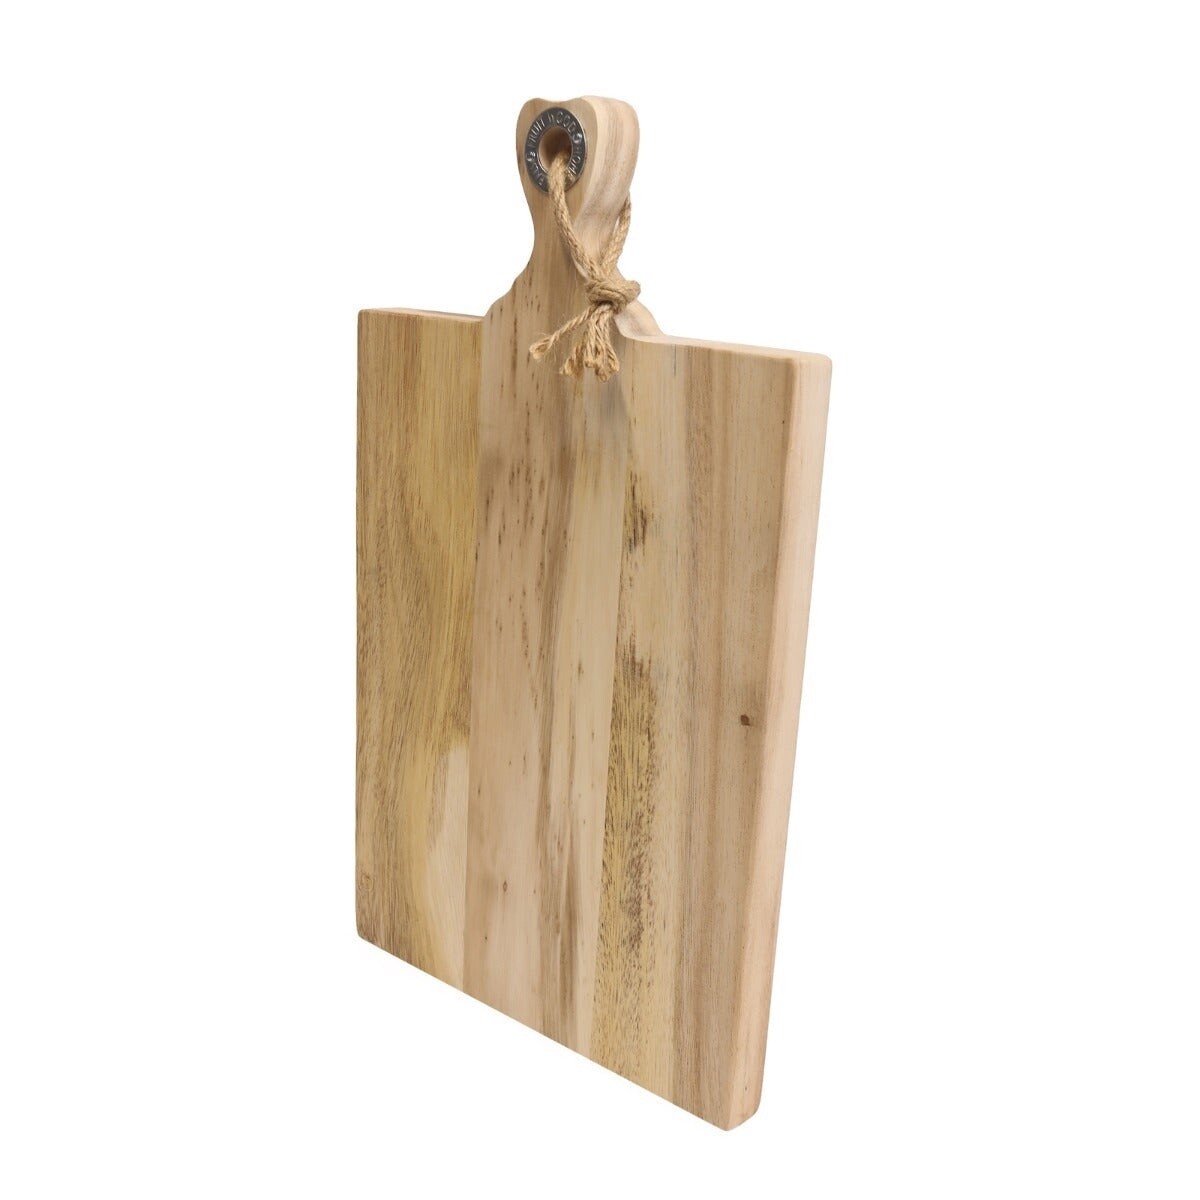 Custom Acacia Wood Board - Large